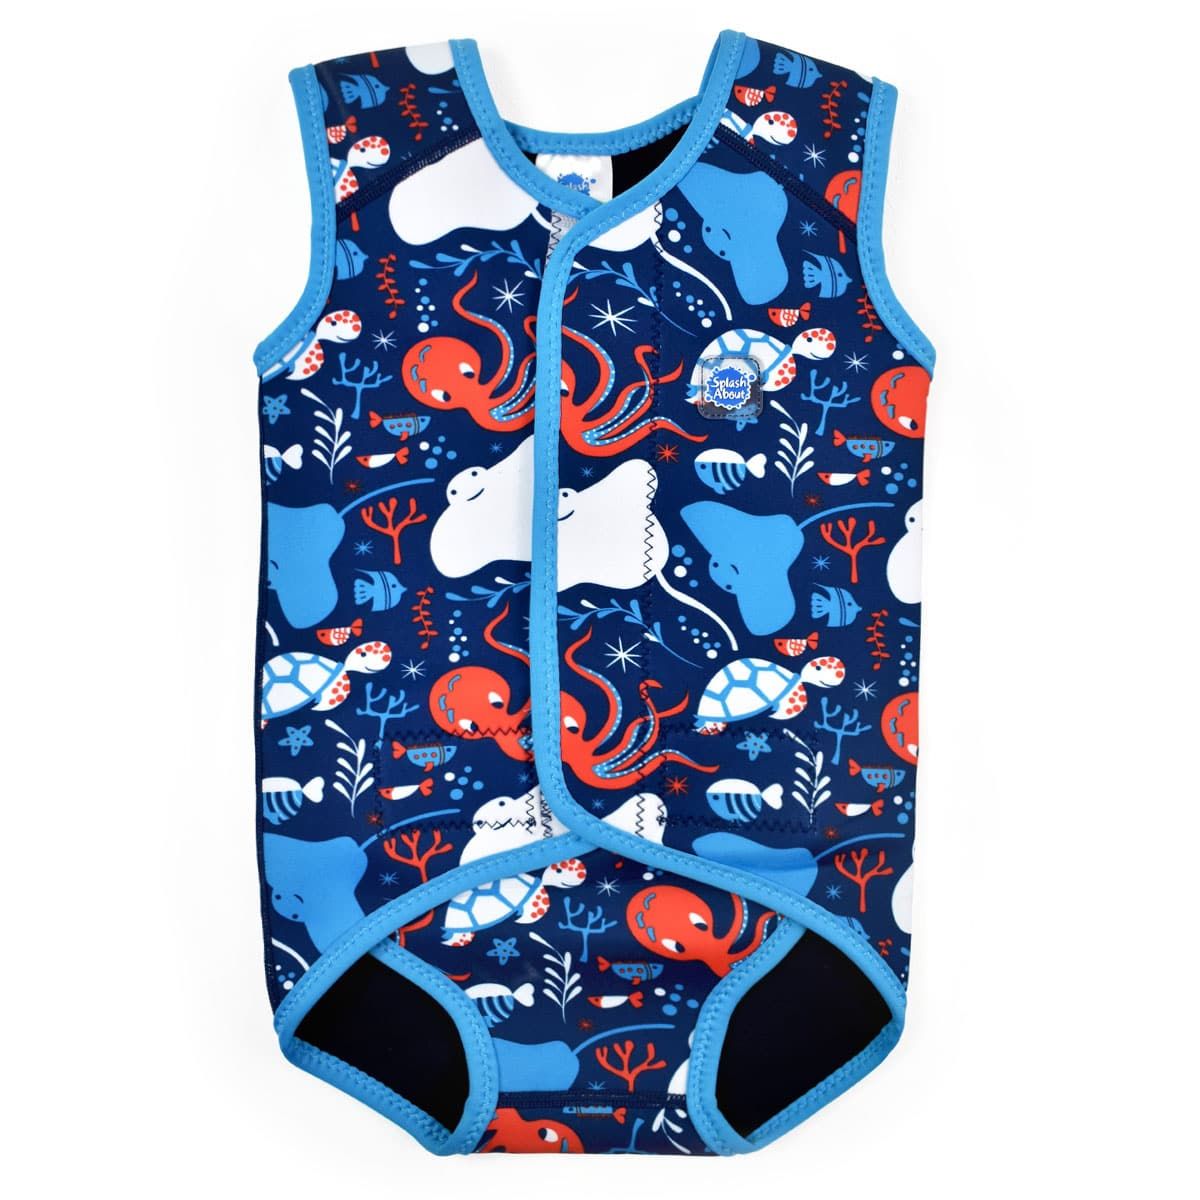 Zoggs Unisex Baby Toddler Neoprene Wetsuit Wrap Swimwear 